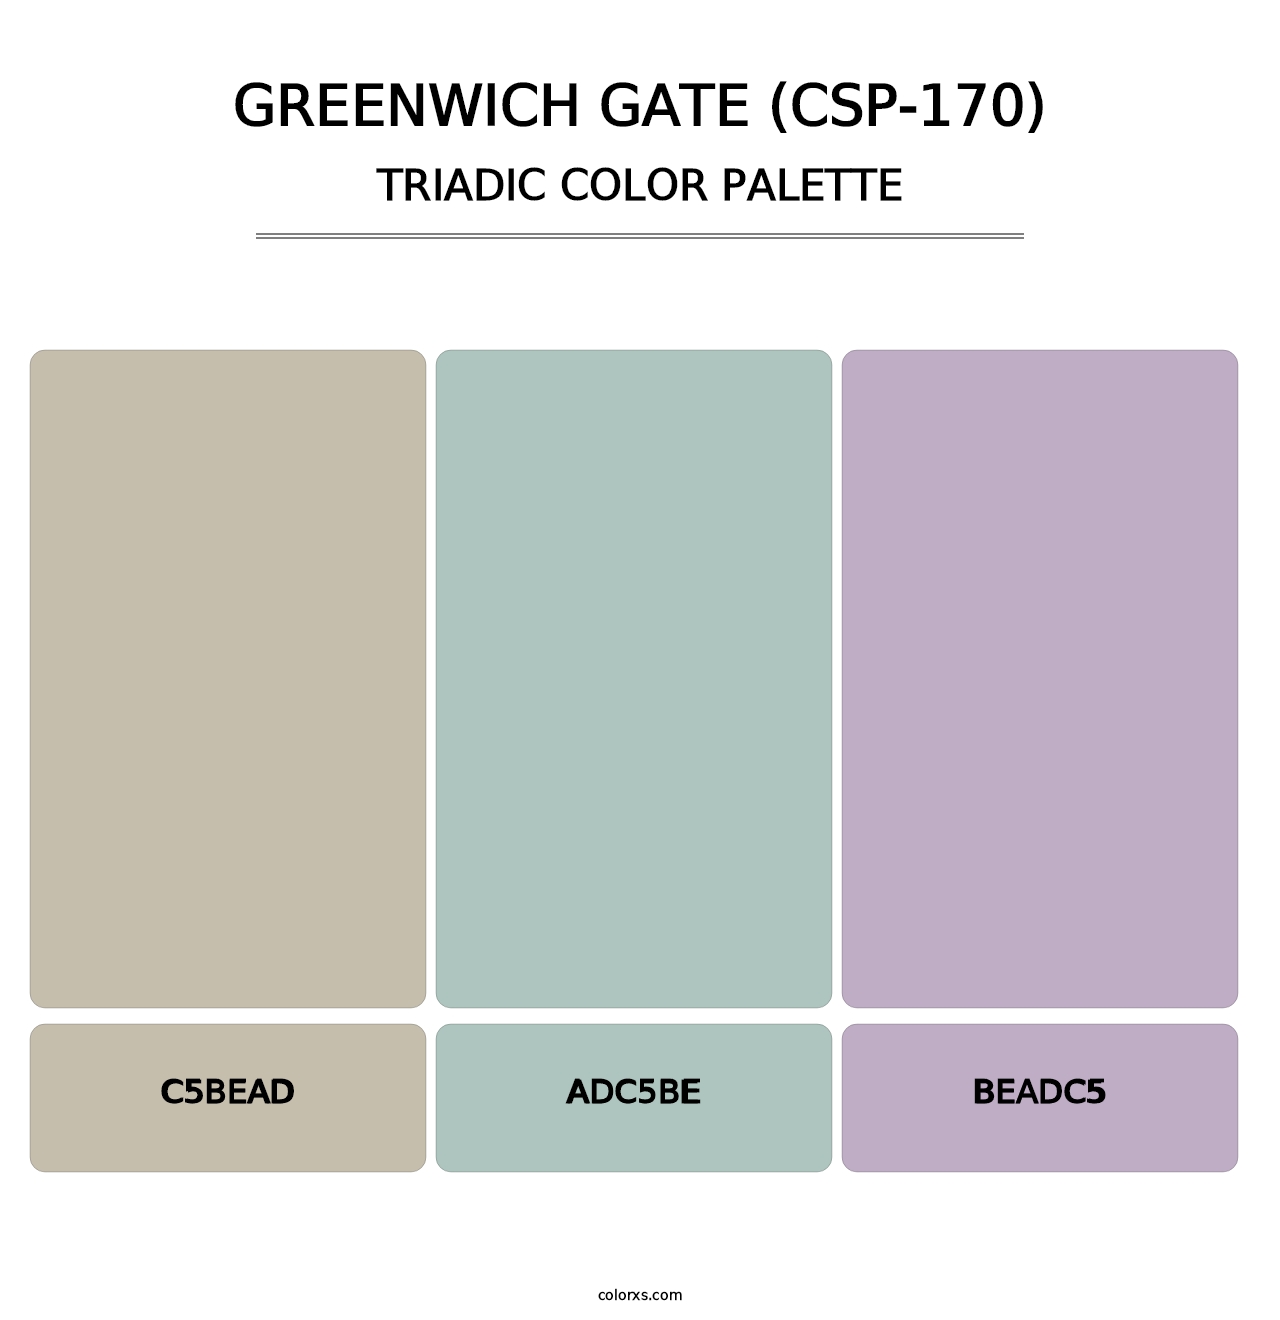 Greenwich Gate (CSP-170) - Triadic Color Palette